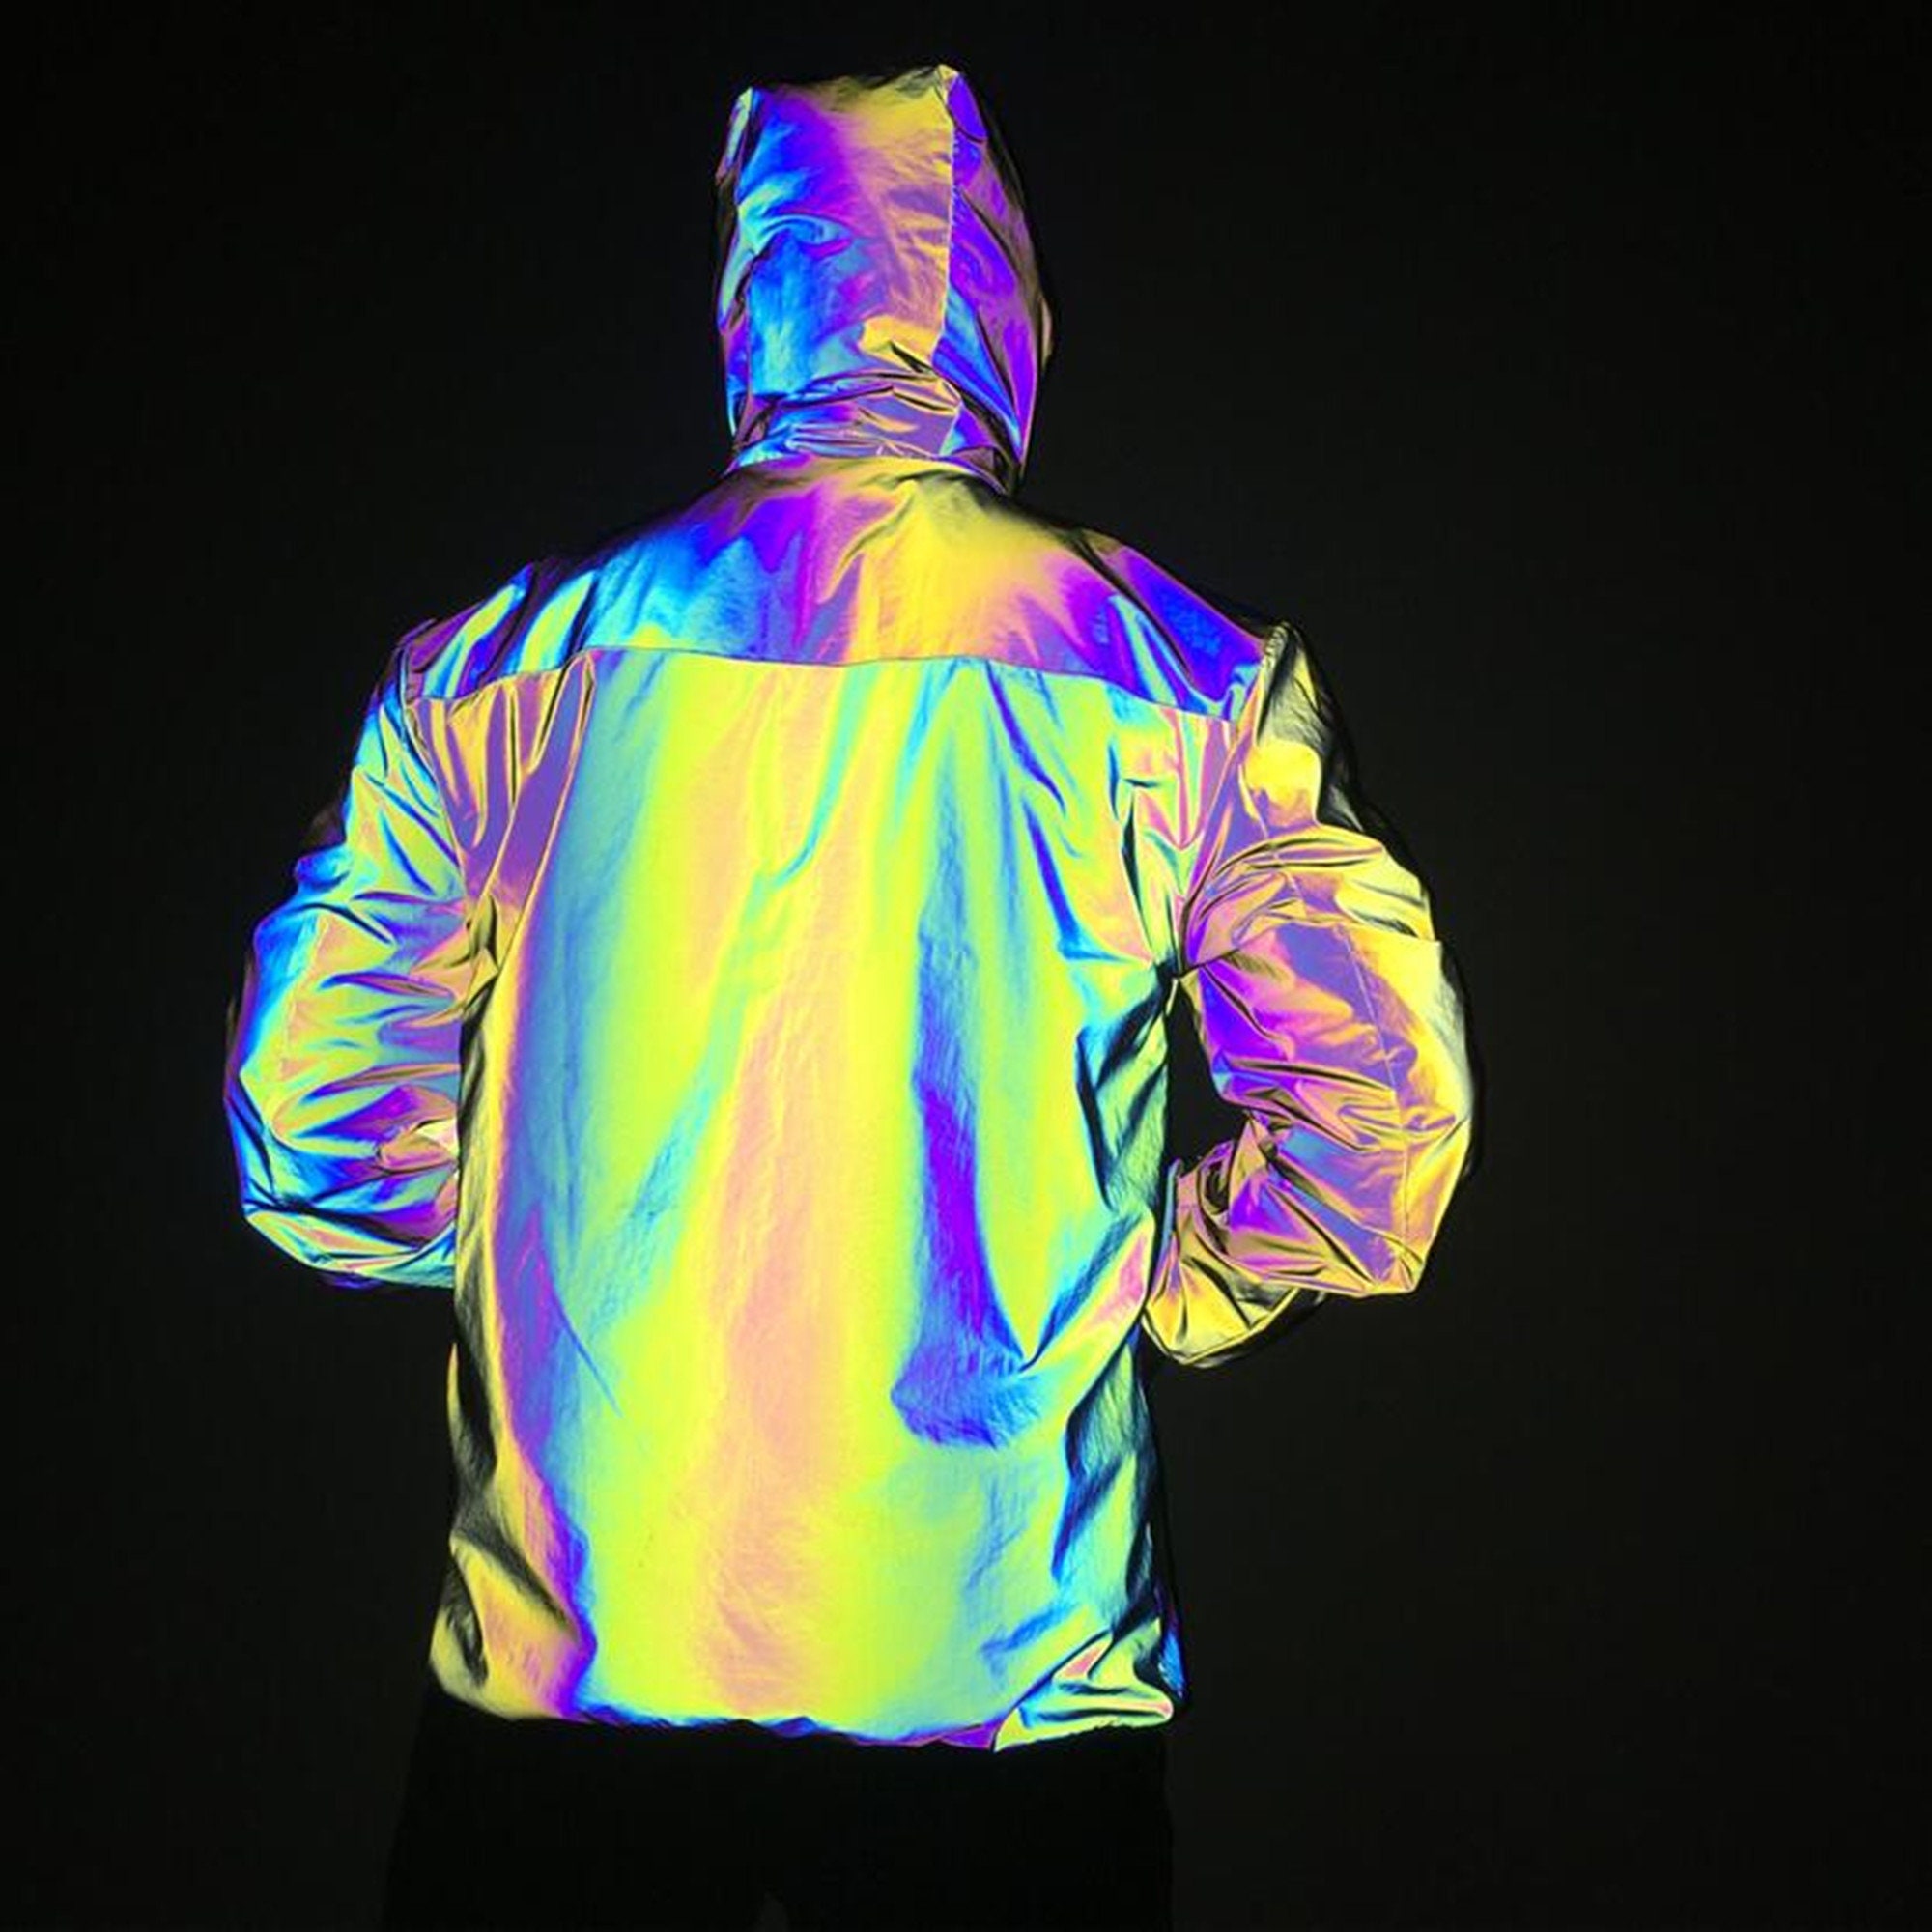 Holographic Puffer - Holographic Jacket - Rainbow Jacket - Iridescent Jacket  - Reflective Jacket - Reflective Puffer Jacket - Puffer Jacket